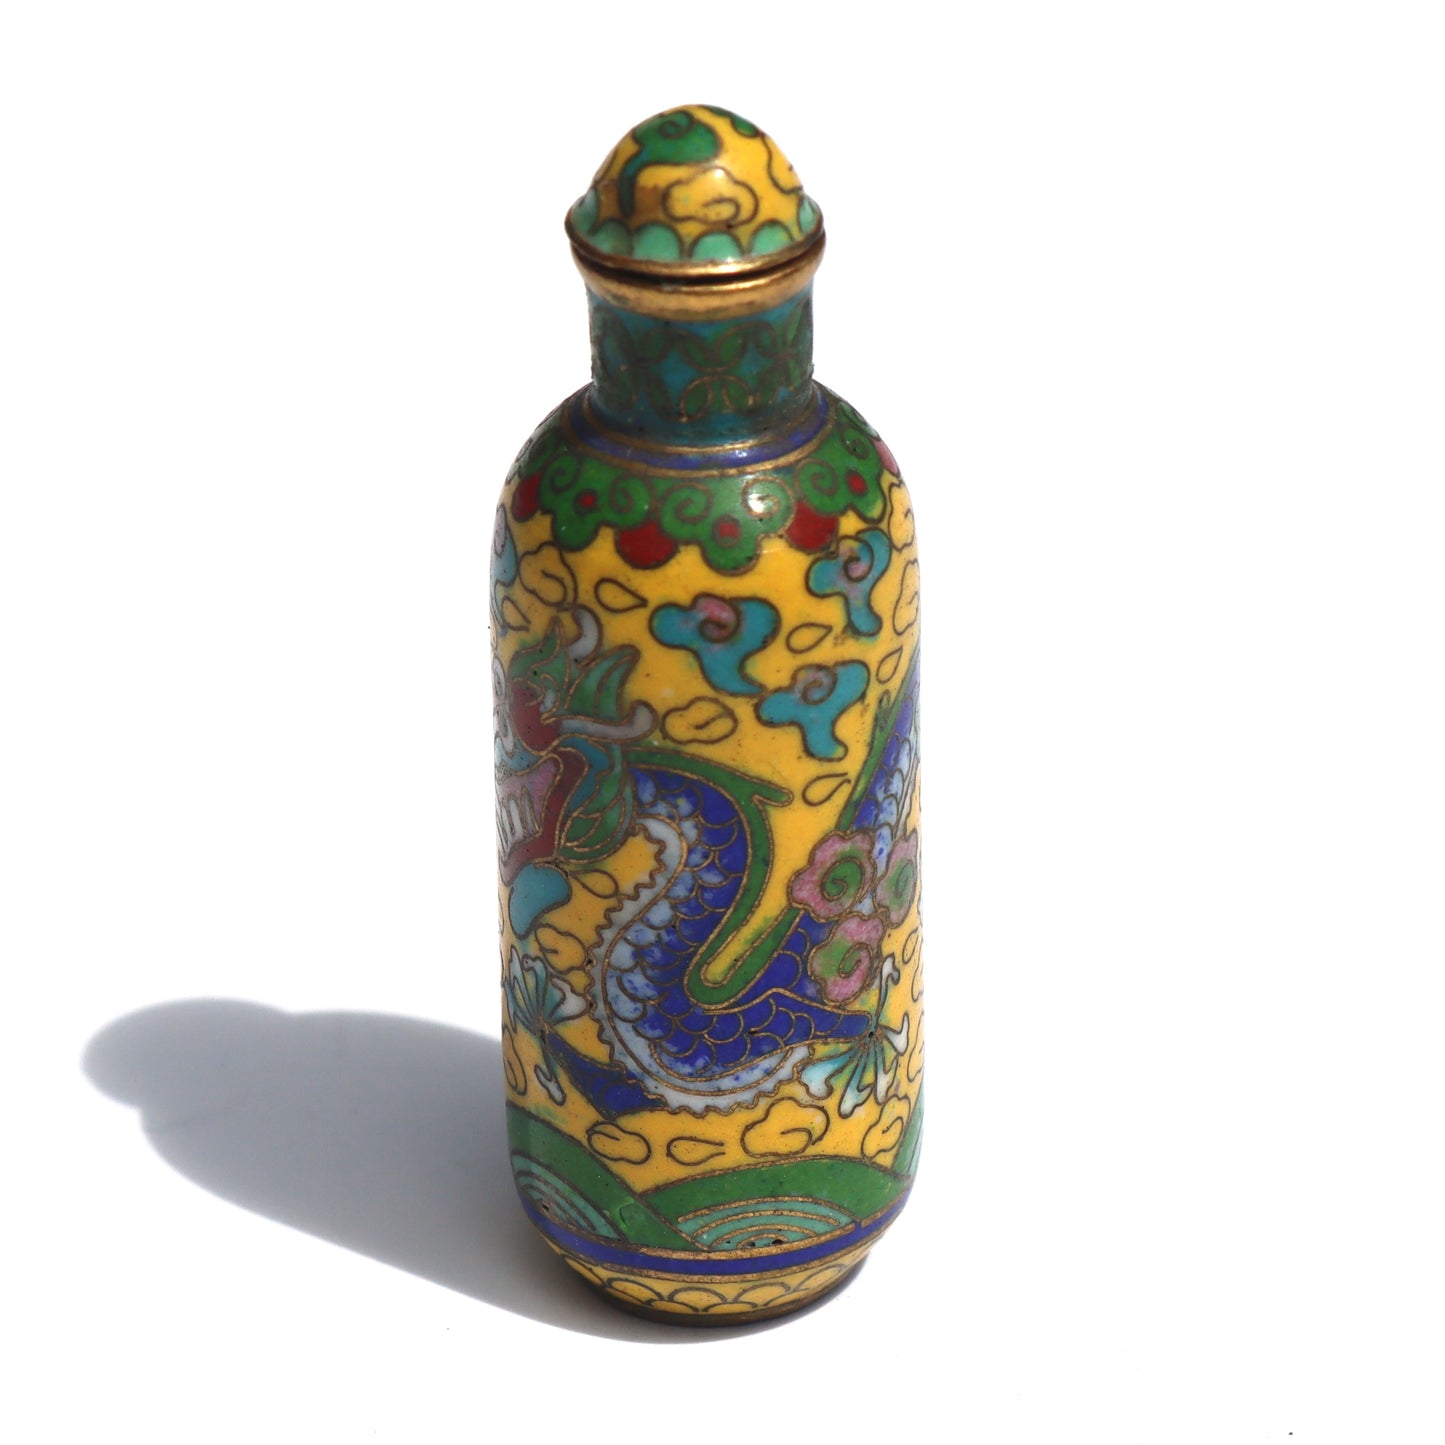 Vintage Chinese Cloisonne Enamel Dragon Miniature Snuff Bottle